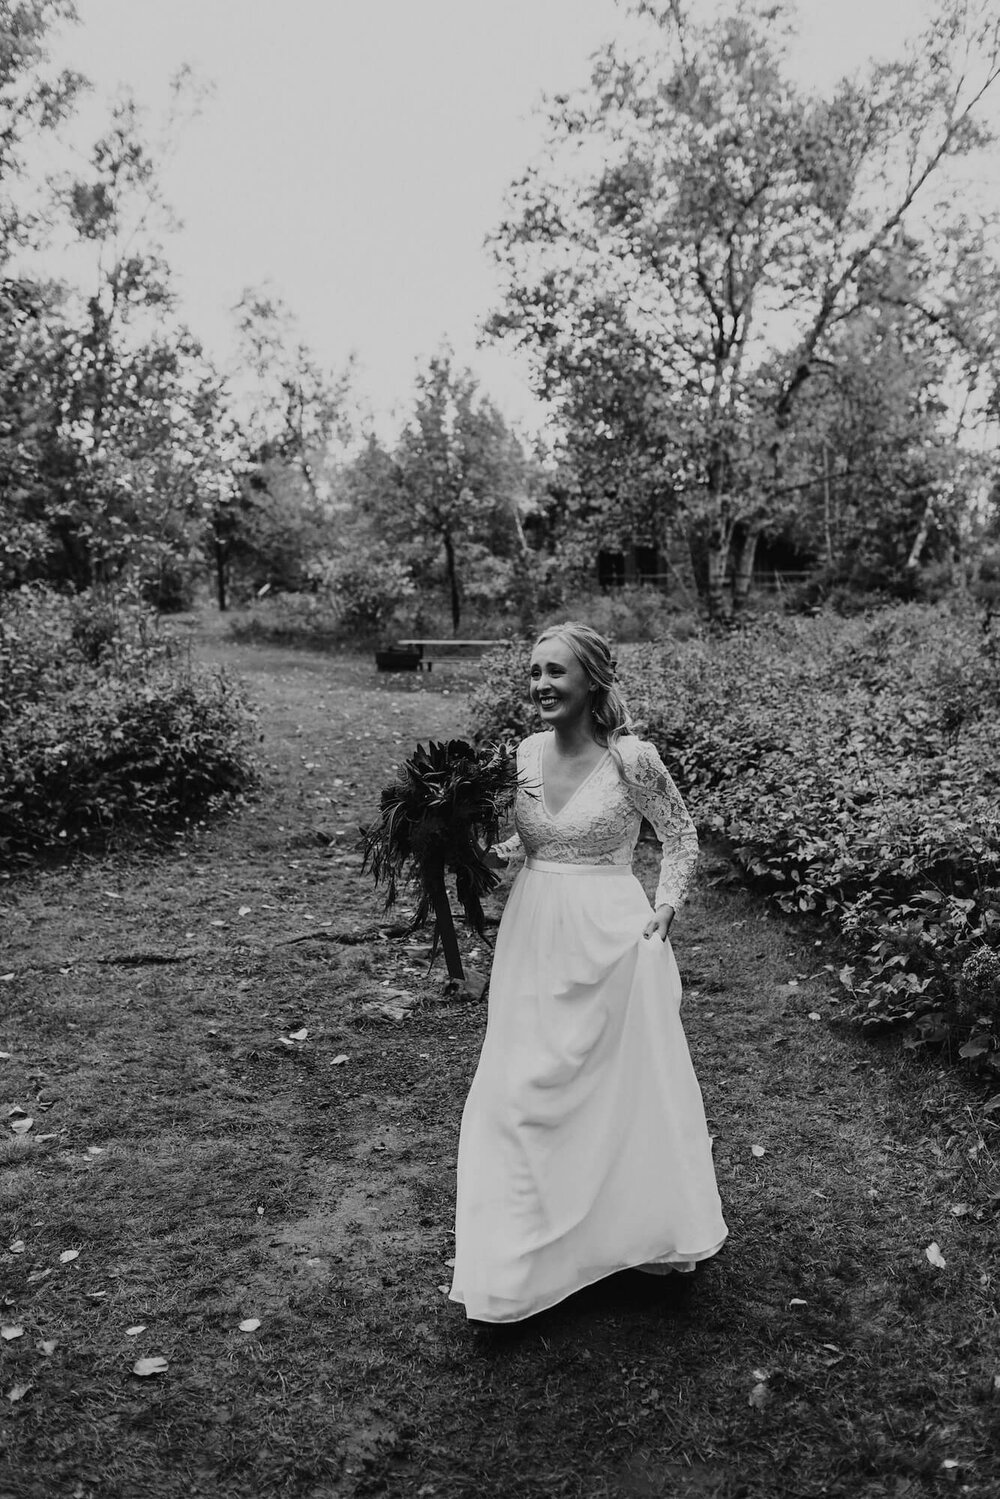 engle-olson-rebel-rabbit-photography-duluth-wedding-24.jpg